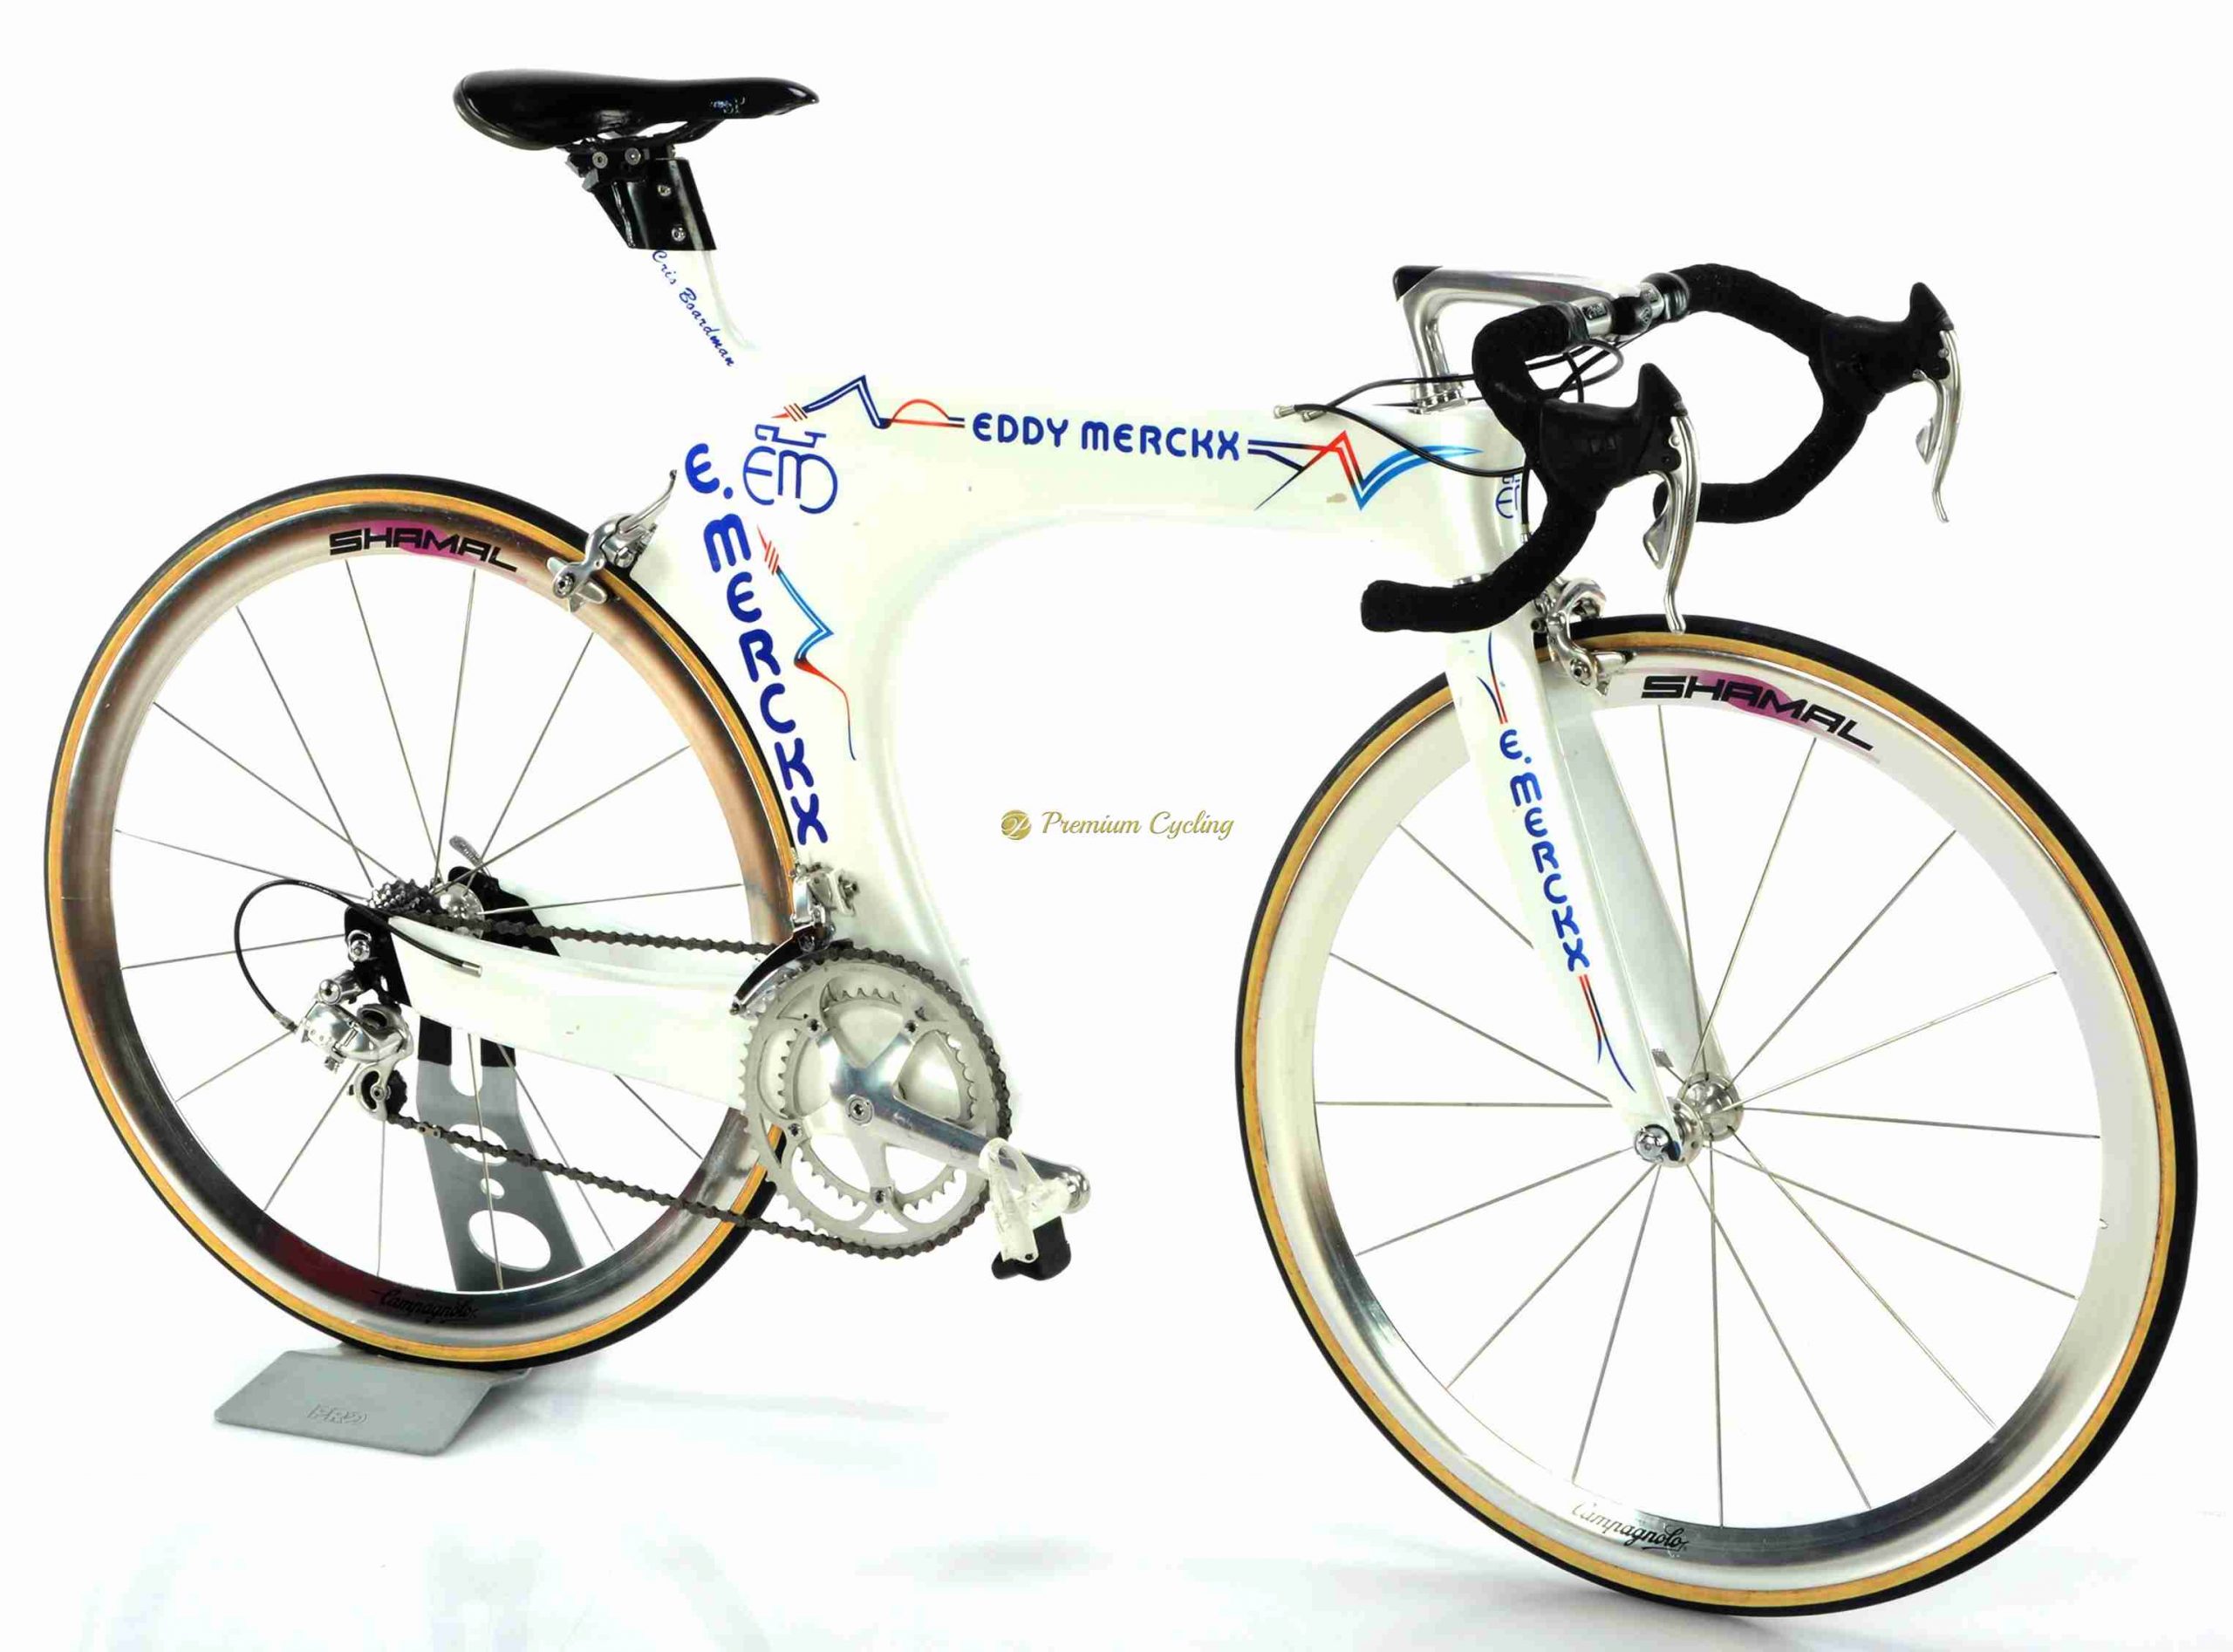 LOTUS 110 Team GAN – Chris BOARDMAN time trial bike (mid 1990s) – SOLD – Premium Cycling